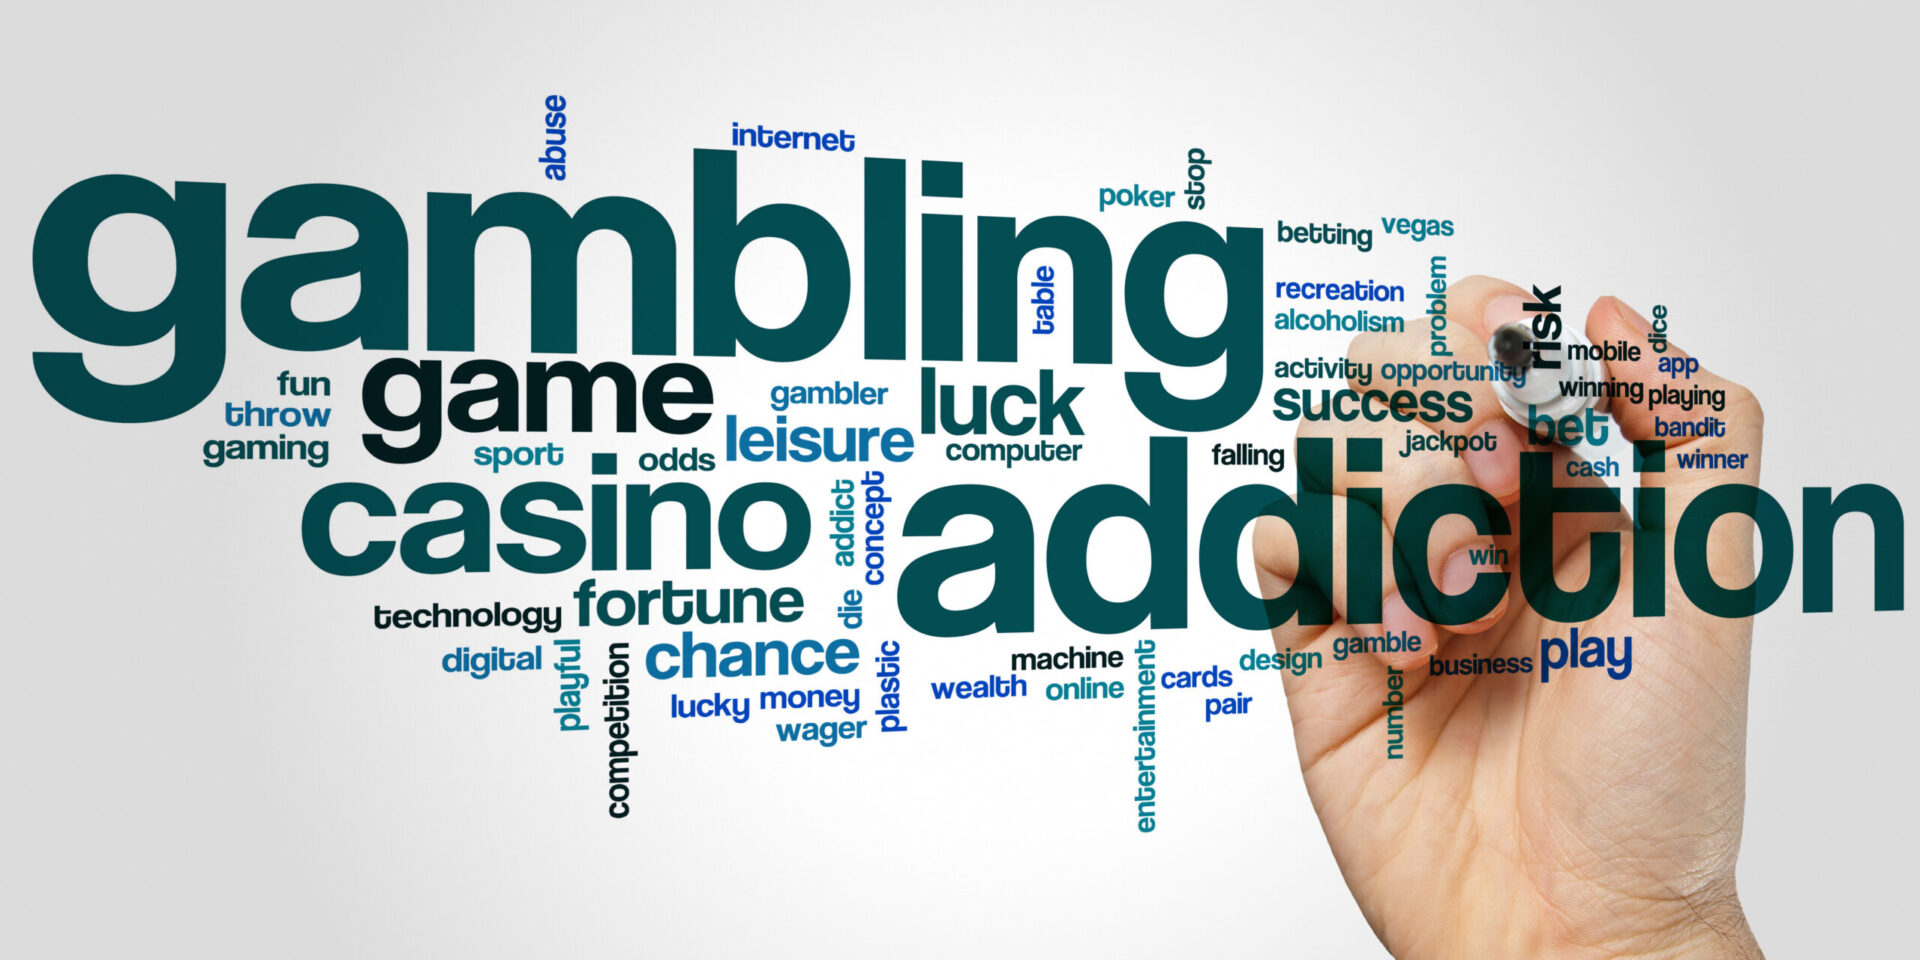 Behavioural Therapies for Gambling Addiction